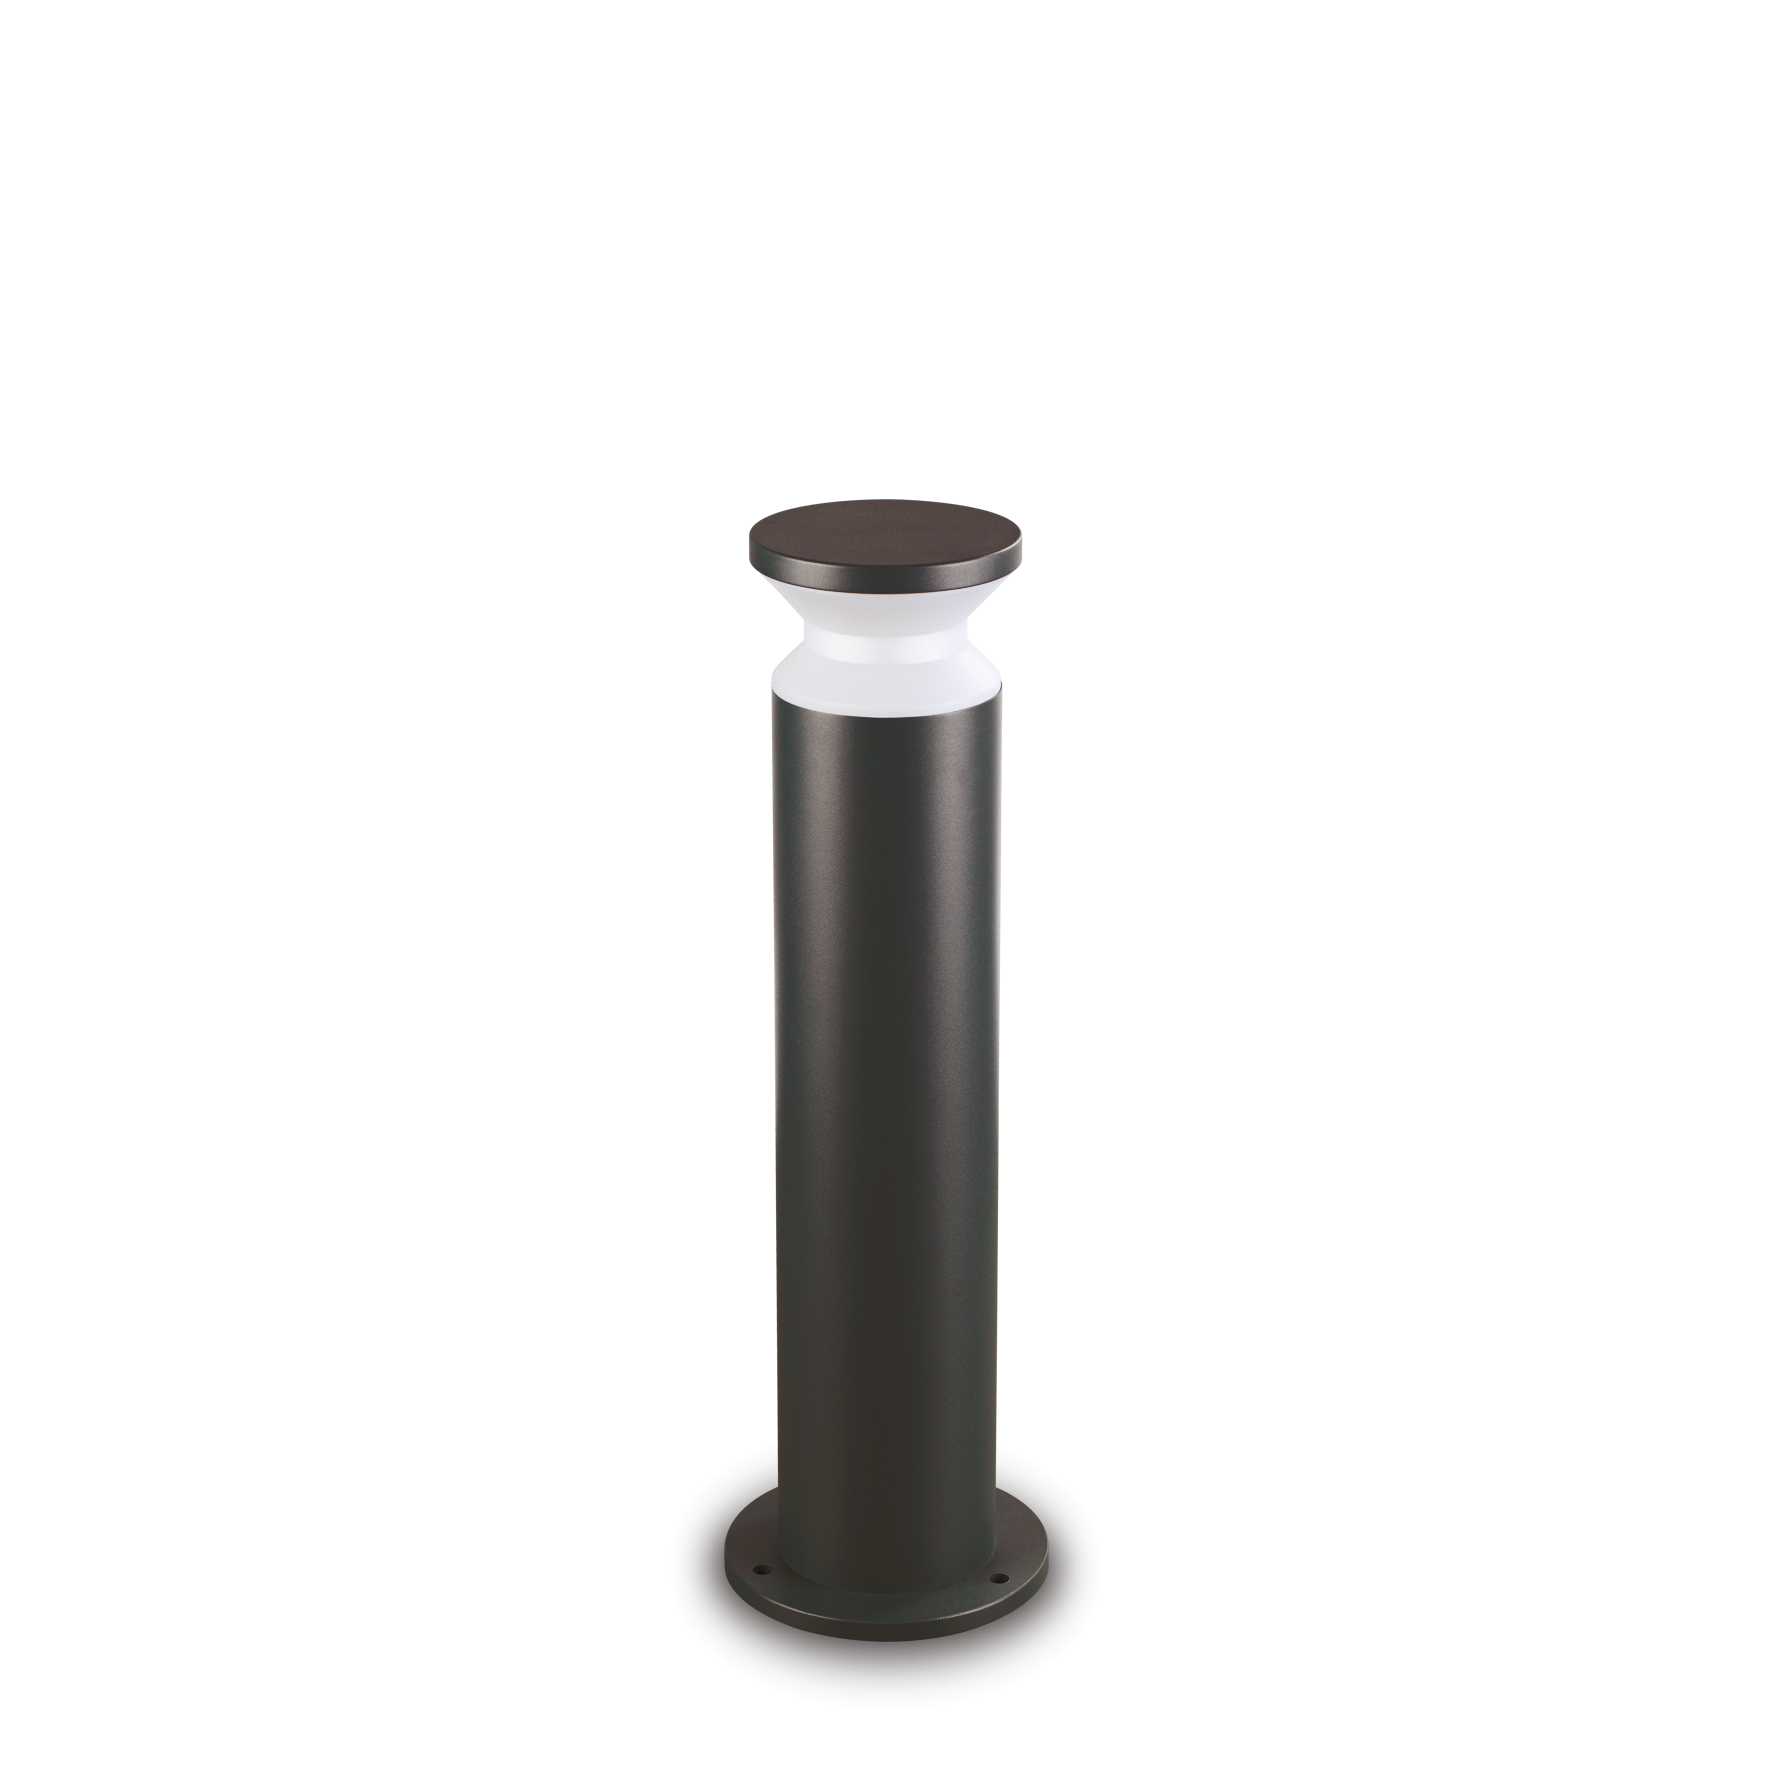 AD hotelska oprema Vanjska podna lampa Torre pt1 h60- Crne boje slika proizvoda